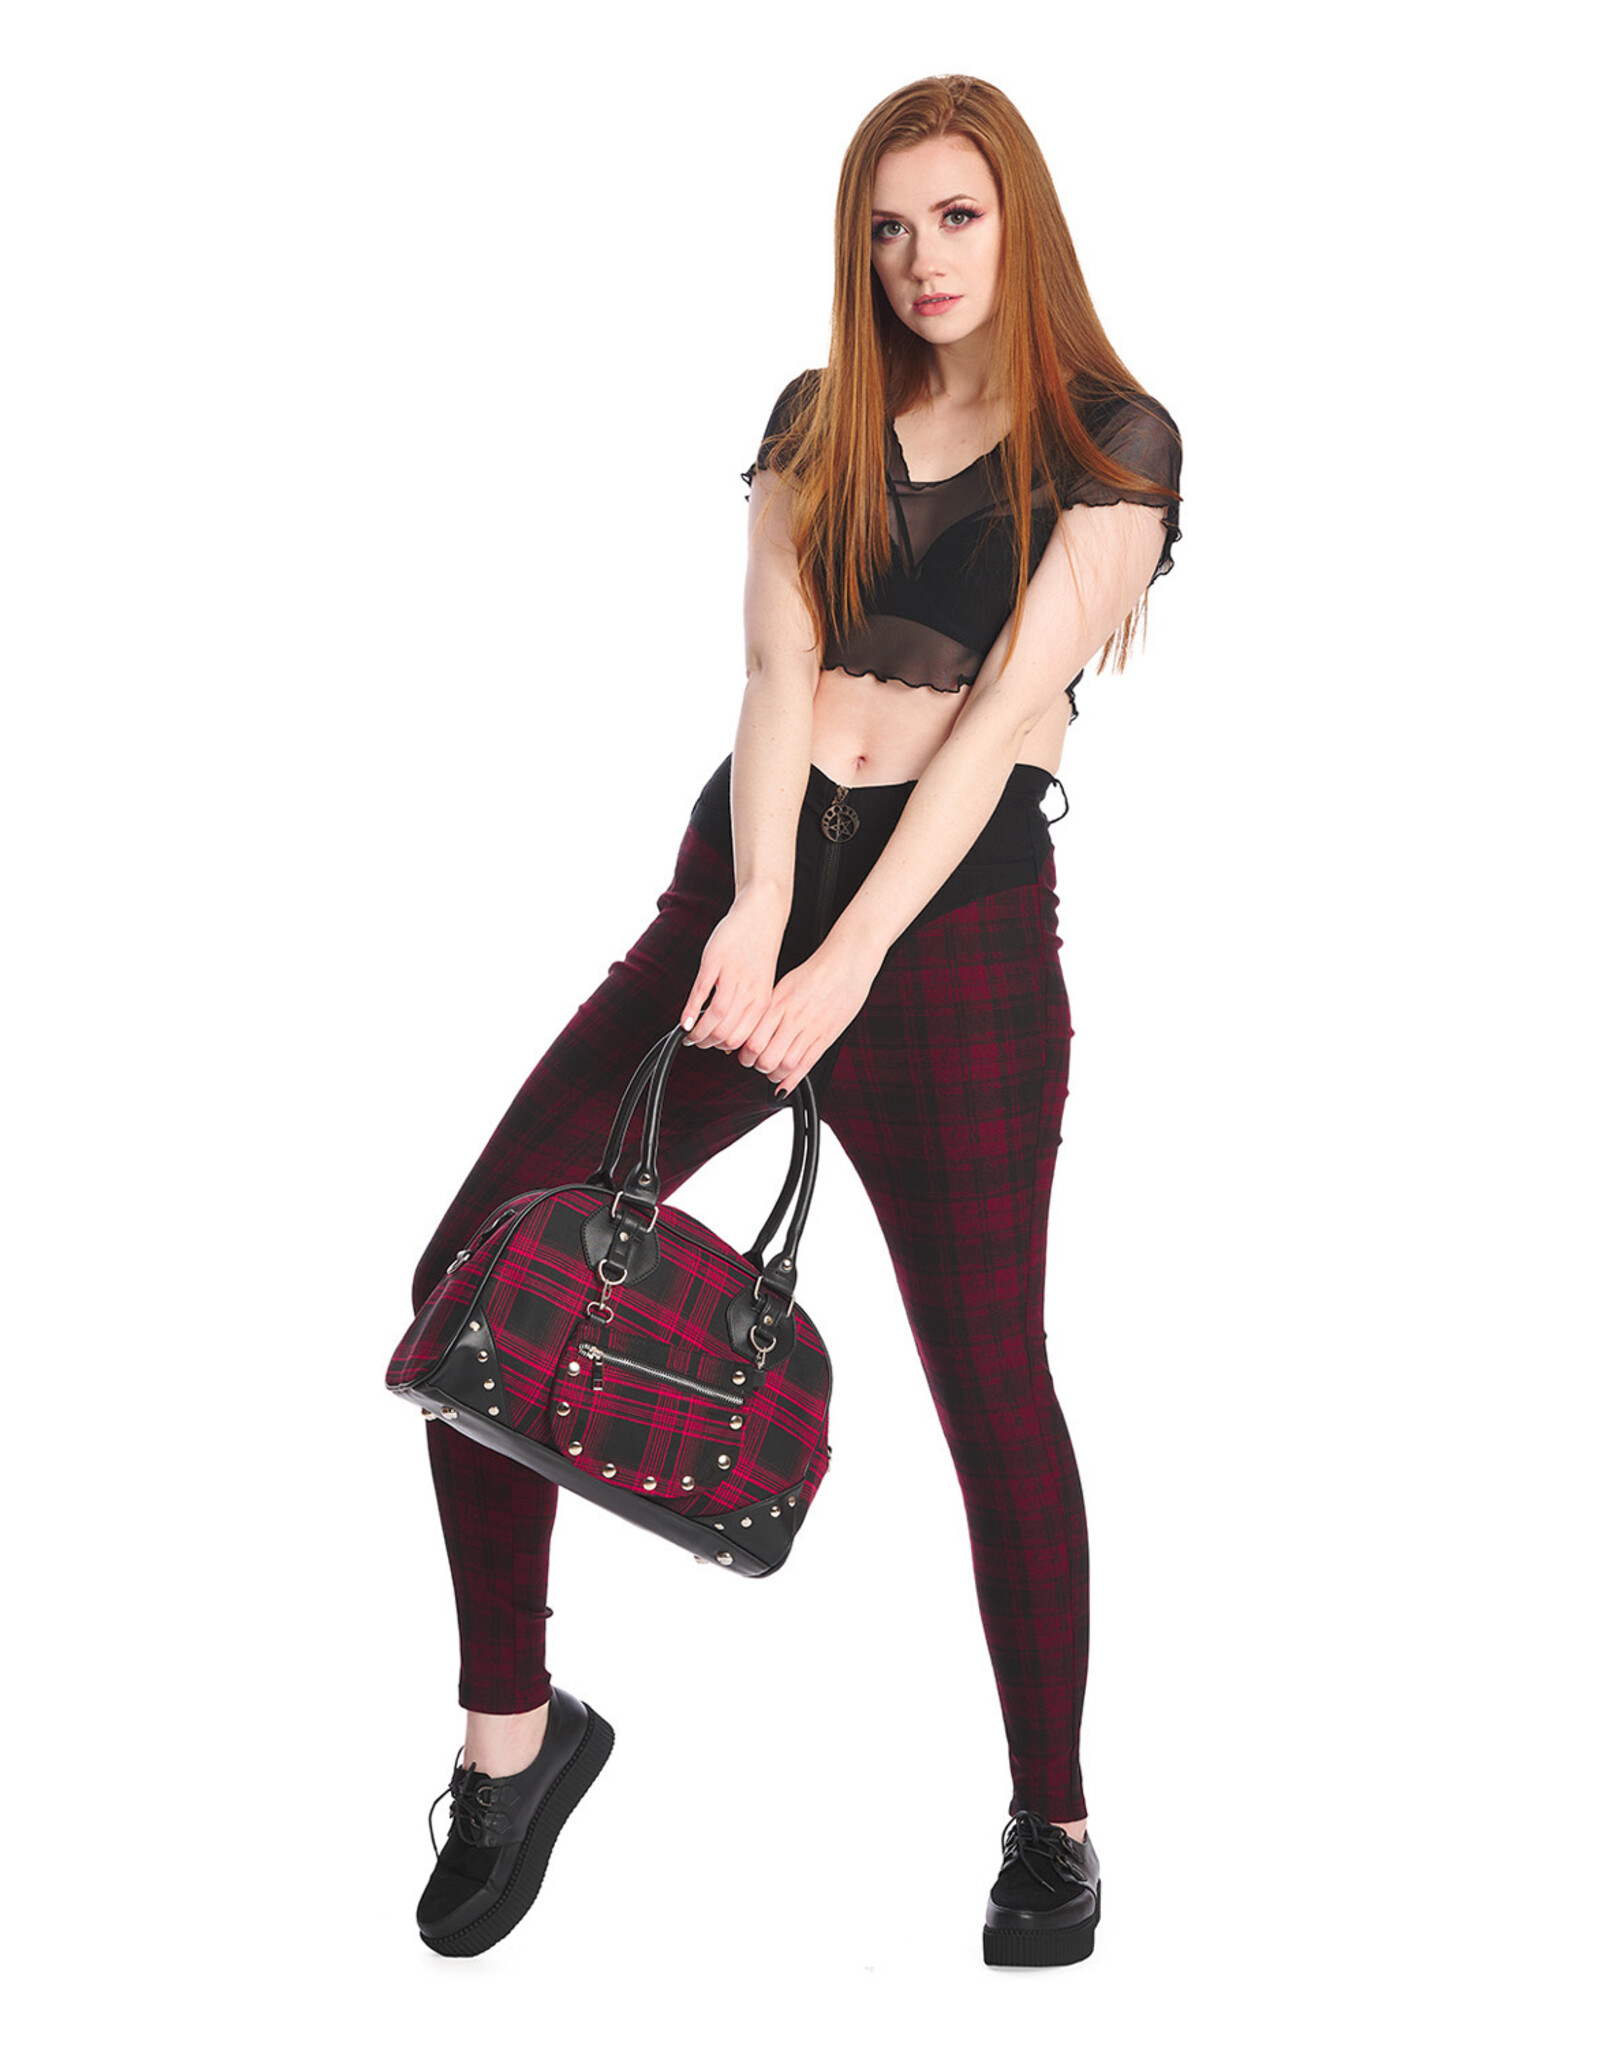 Banned Gothic bags Steampunk bags - Banned Warren Plaid Handbag red-black